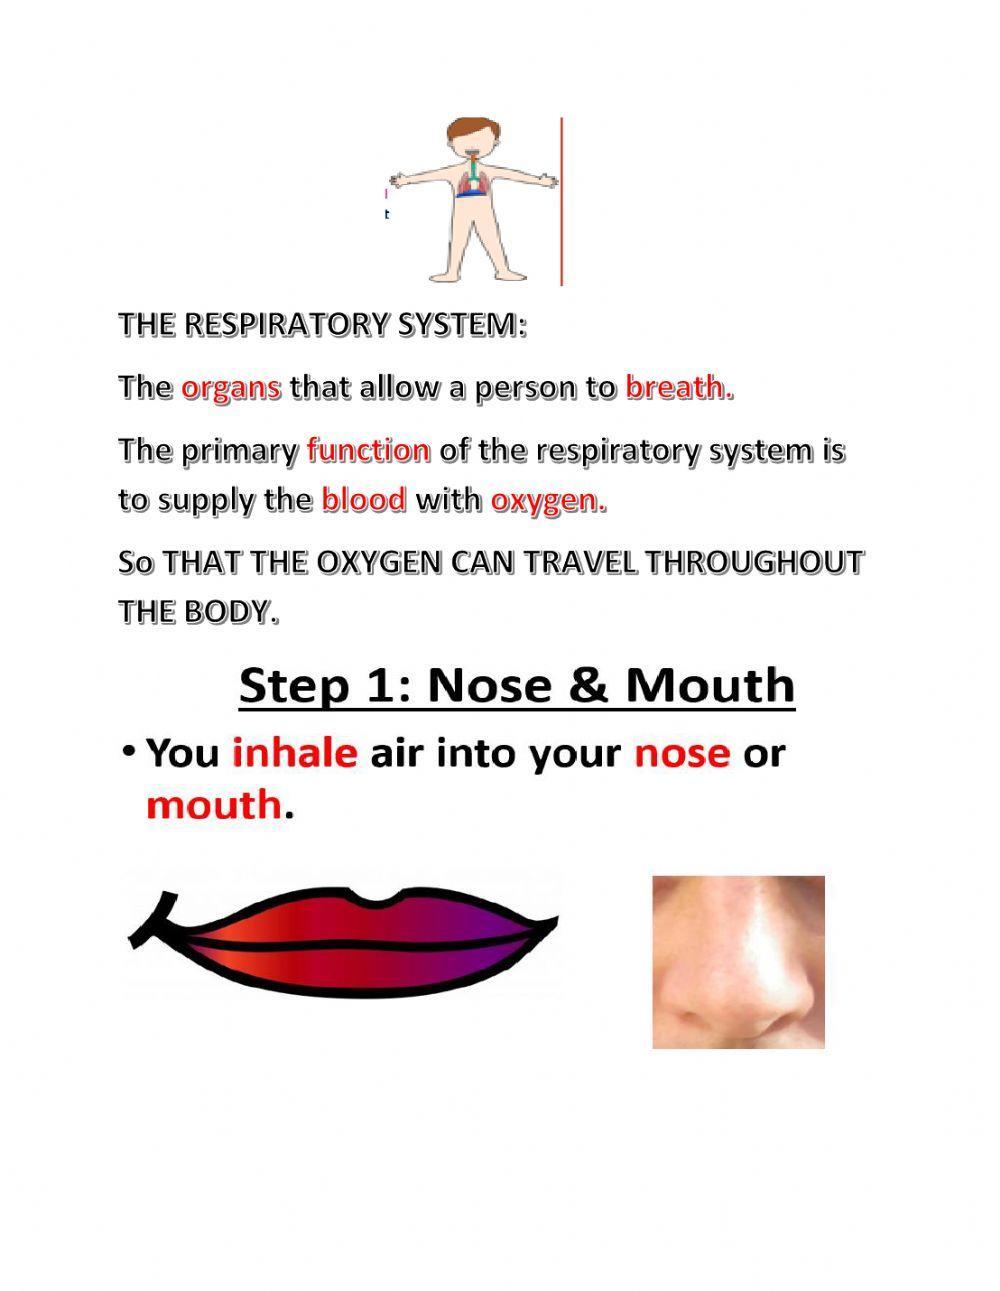 Respiratory system